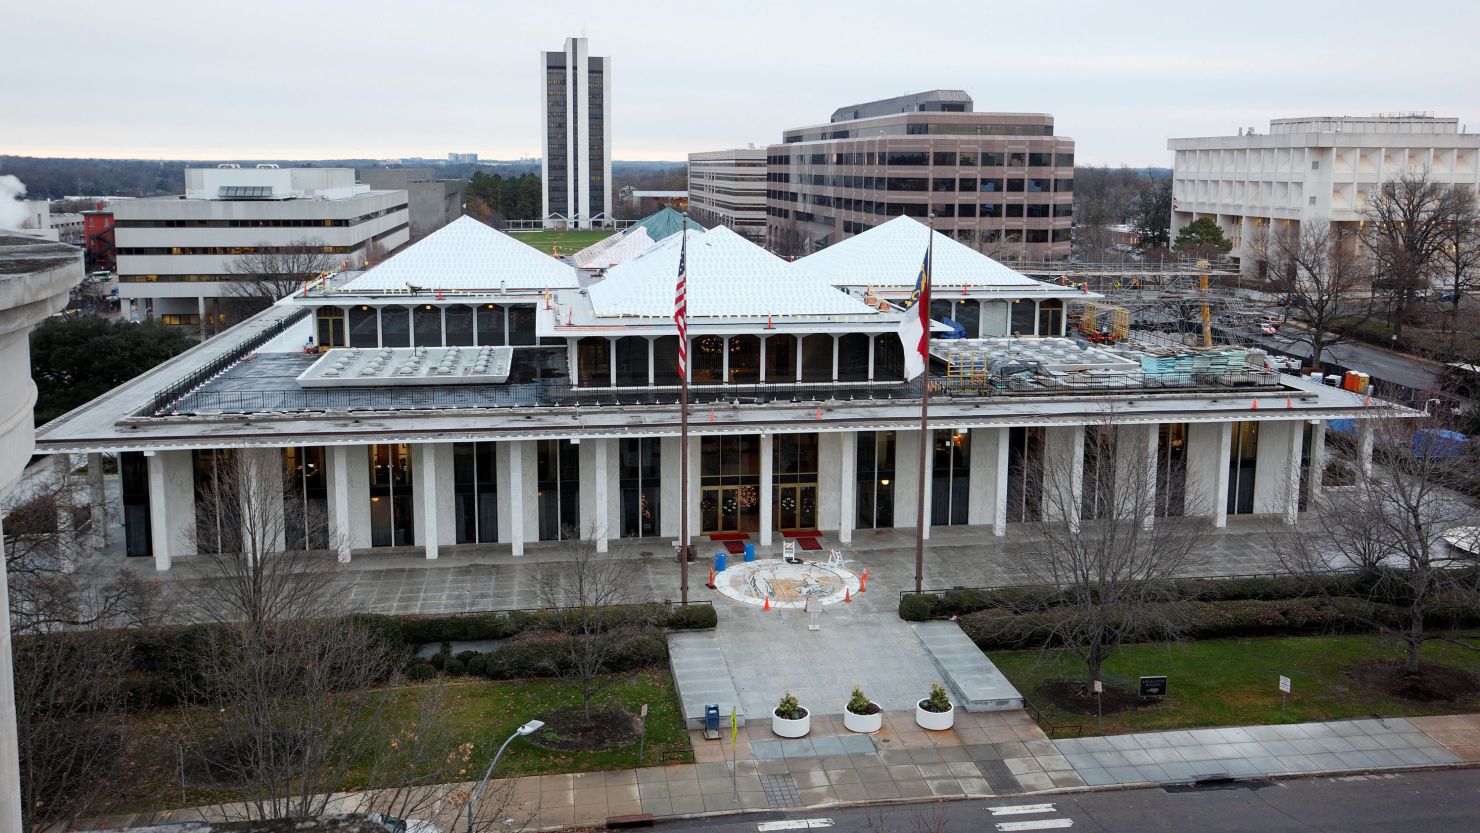 FILE PHOTO: North Carolina's Legislative Building seen in Raleigh, North Carolina, U.S. on December 19, 2016.  REUTERS/Jonathan Drake/File Photo